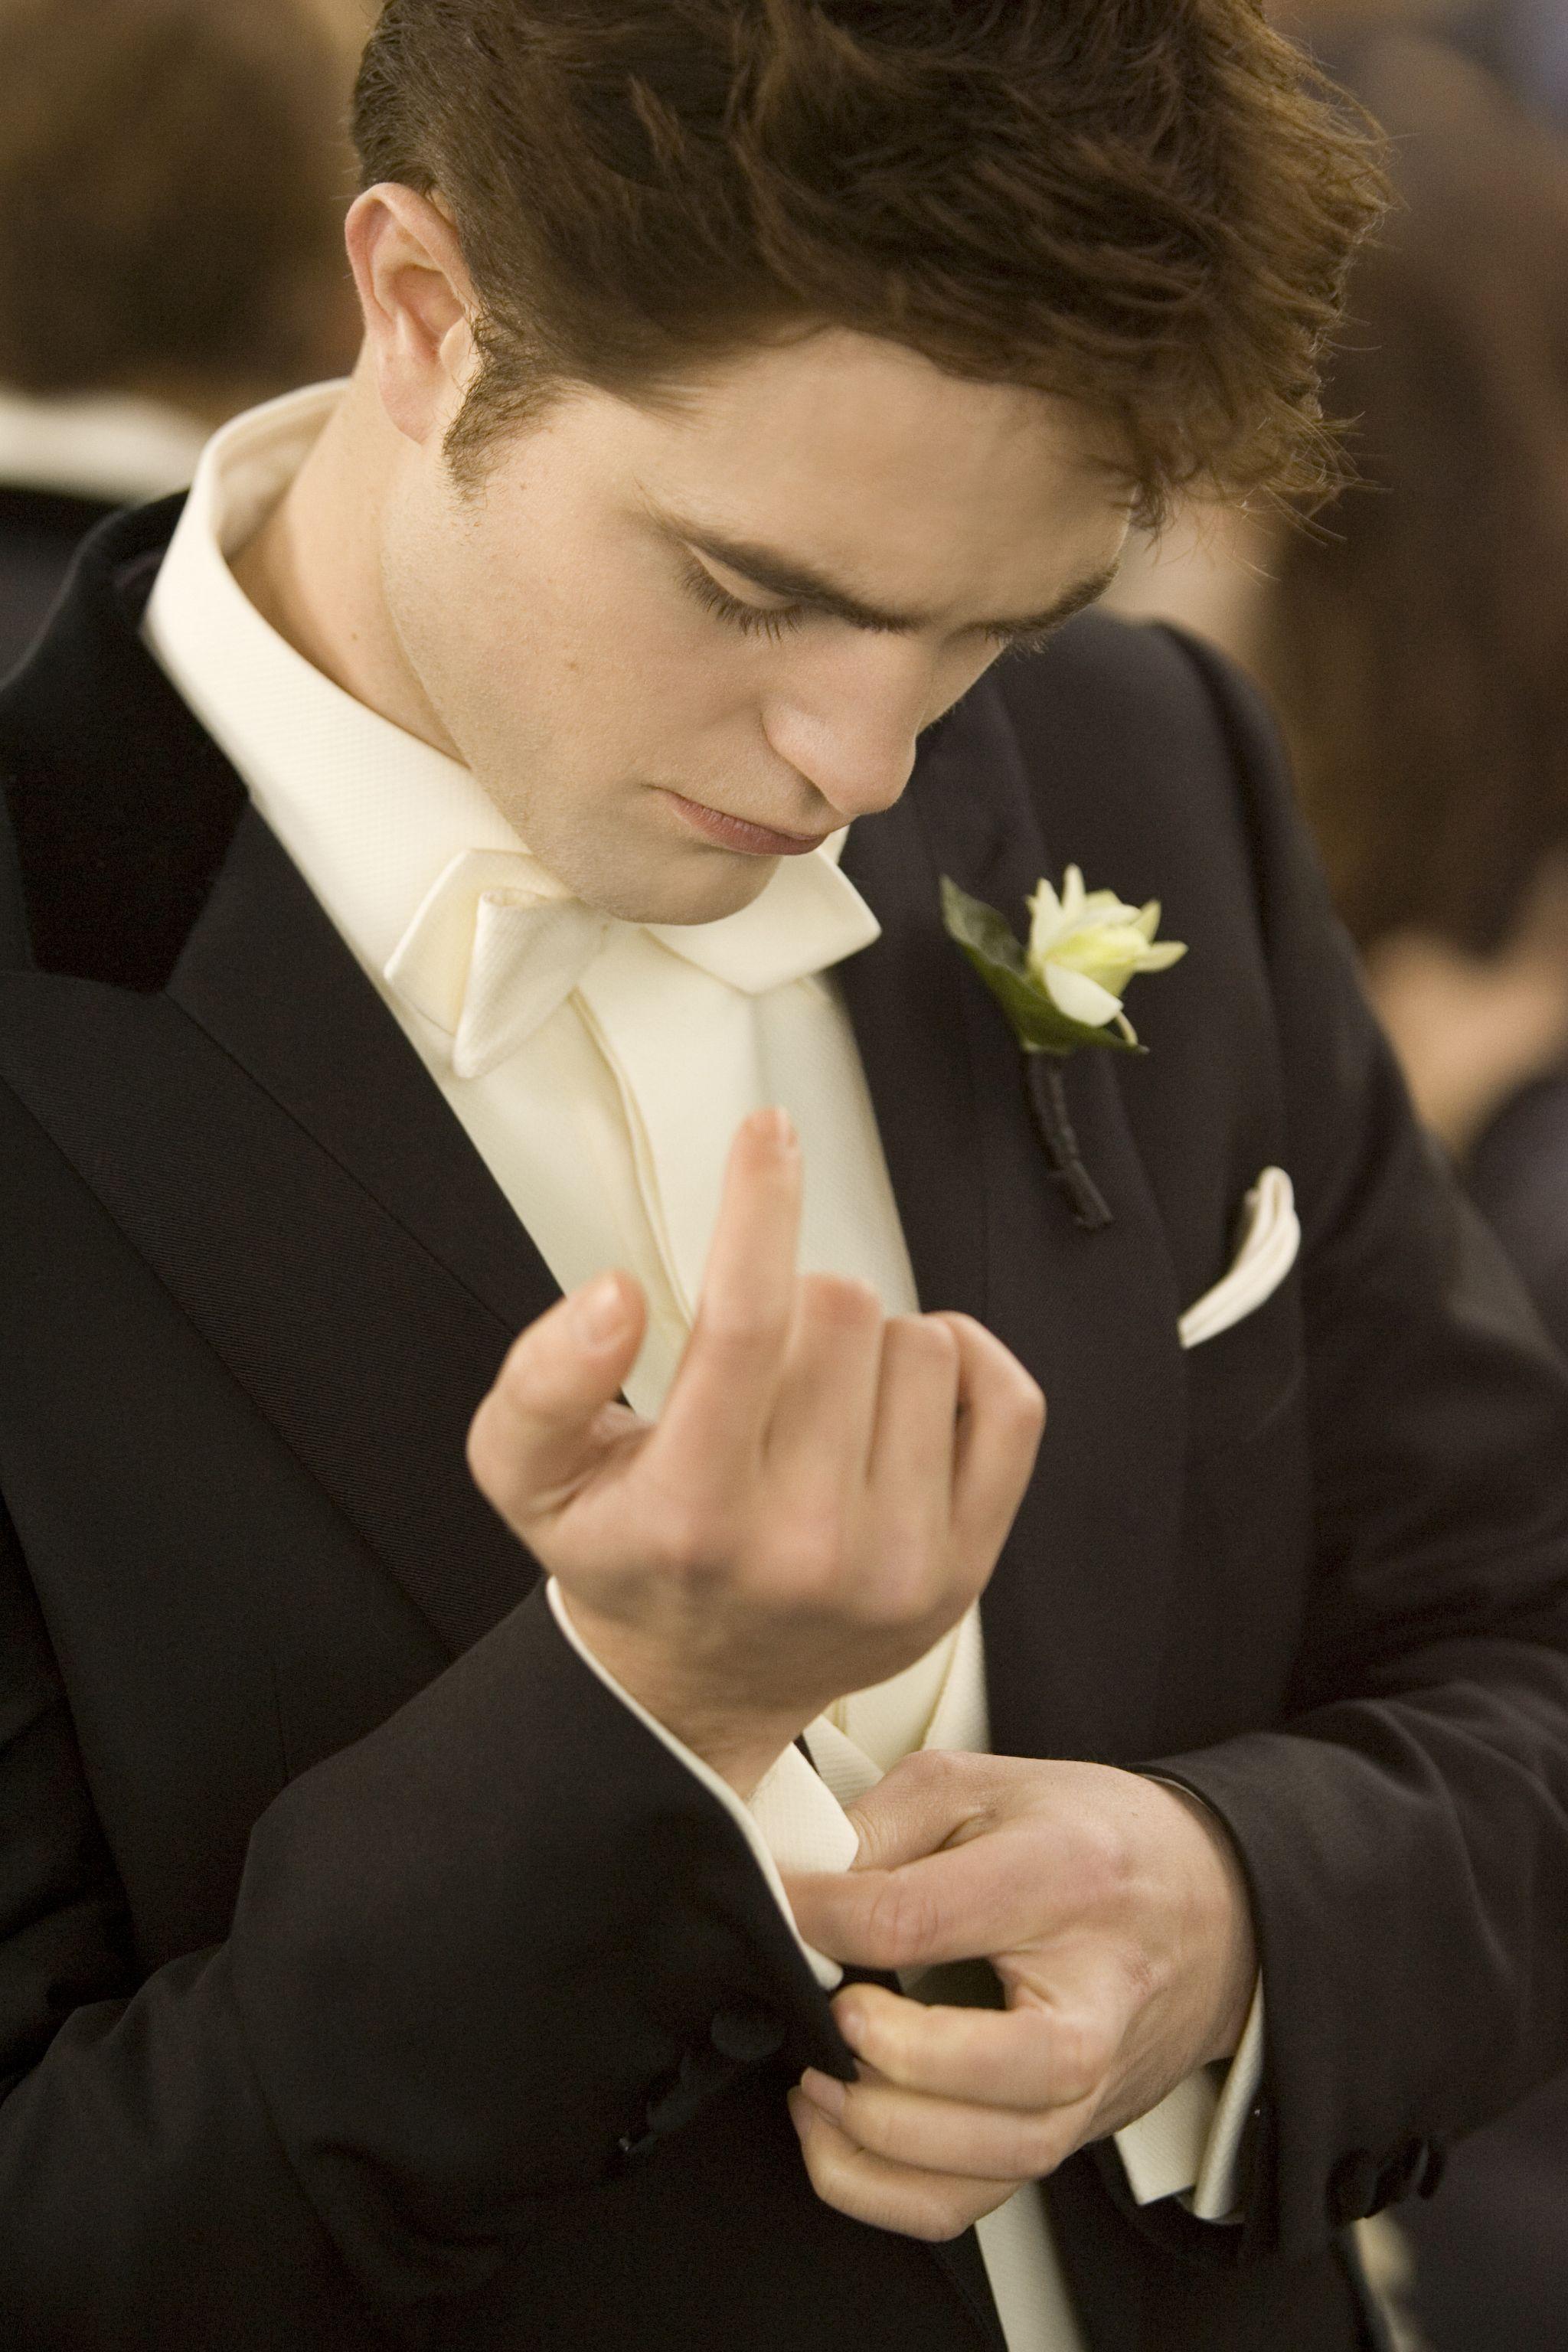 Breaking Dawn Stills with Edward Cullen Now in UHQ. Thinking